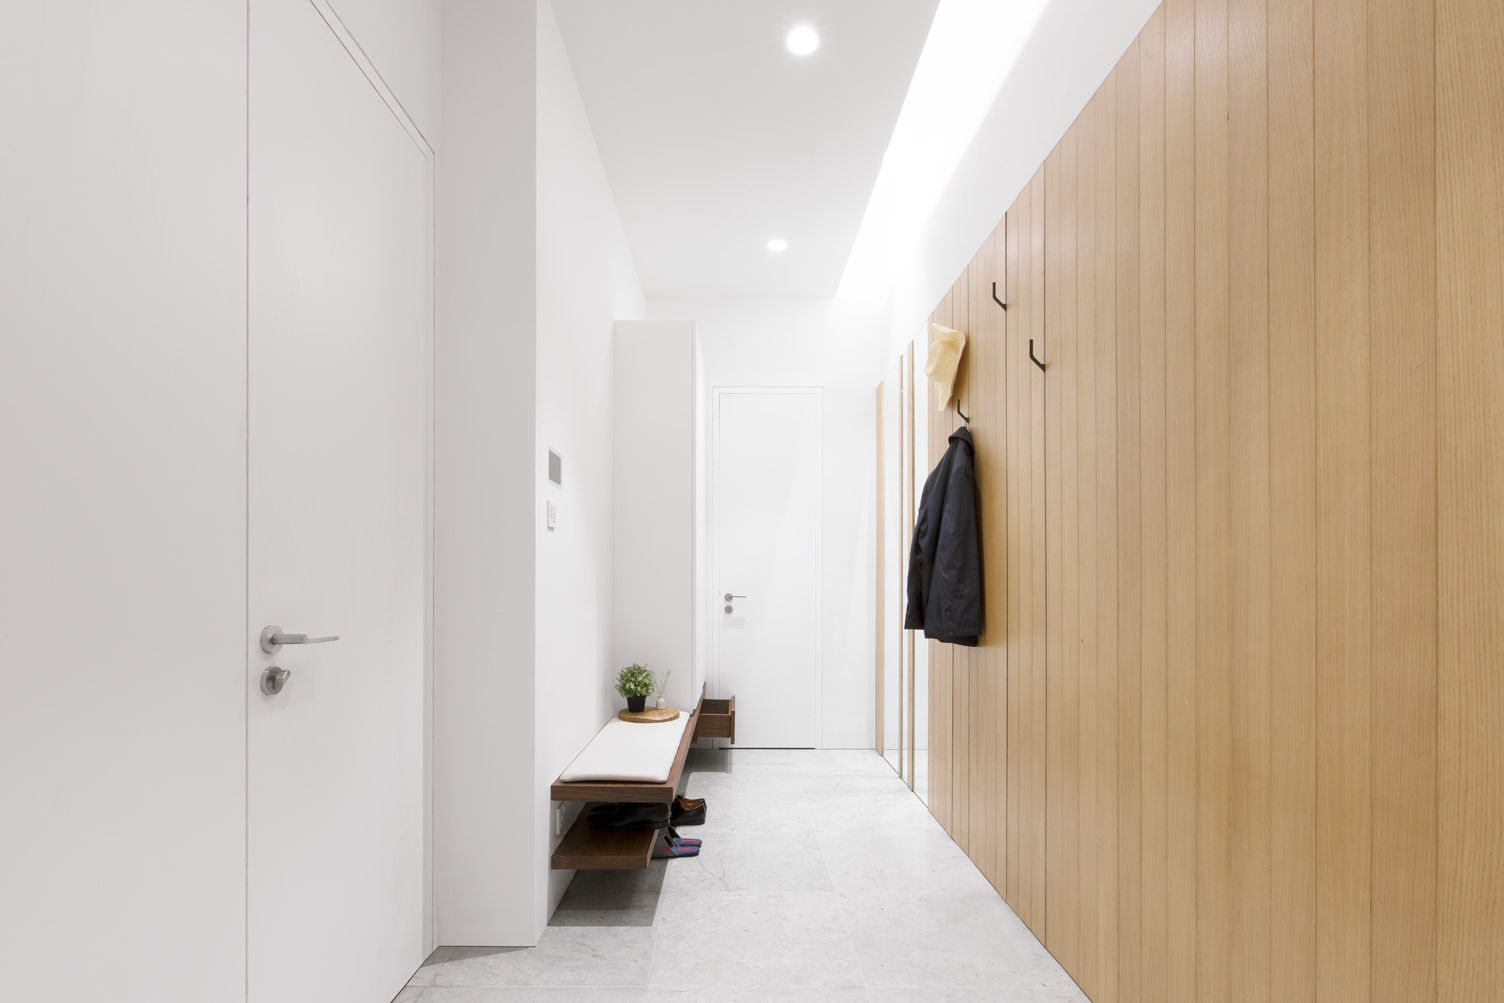 The Spacious Reception homify Modern corridor, hallway & stairs Wood Wood effect oak,Minimal,White,Entrance,reception